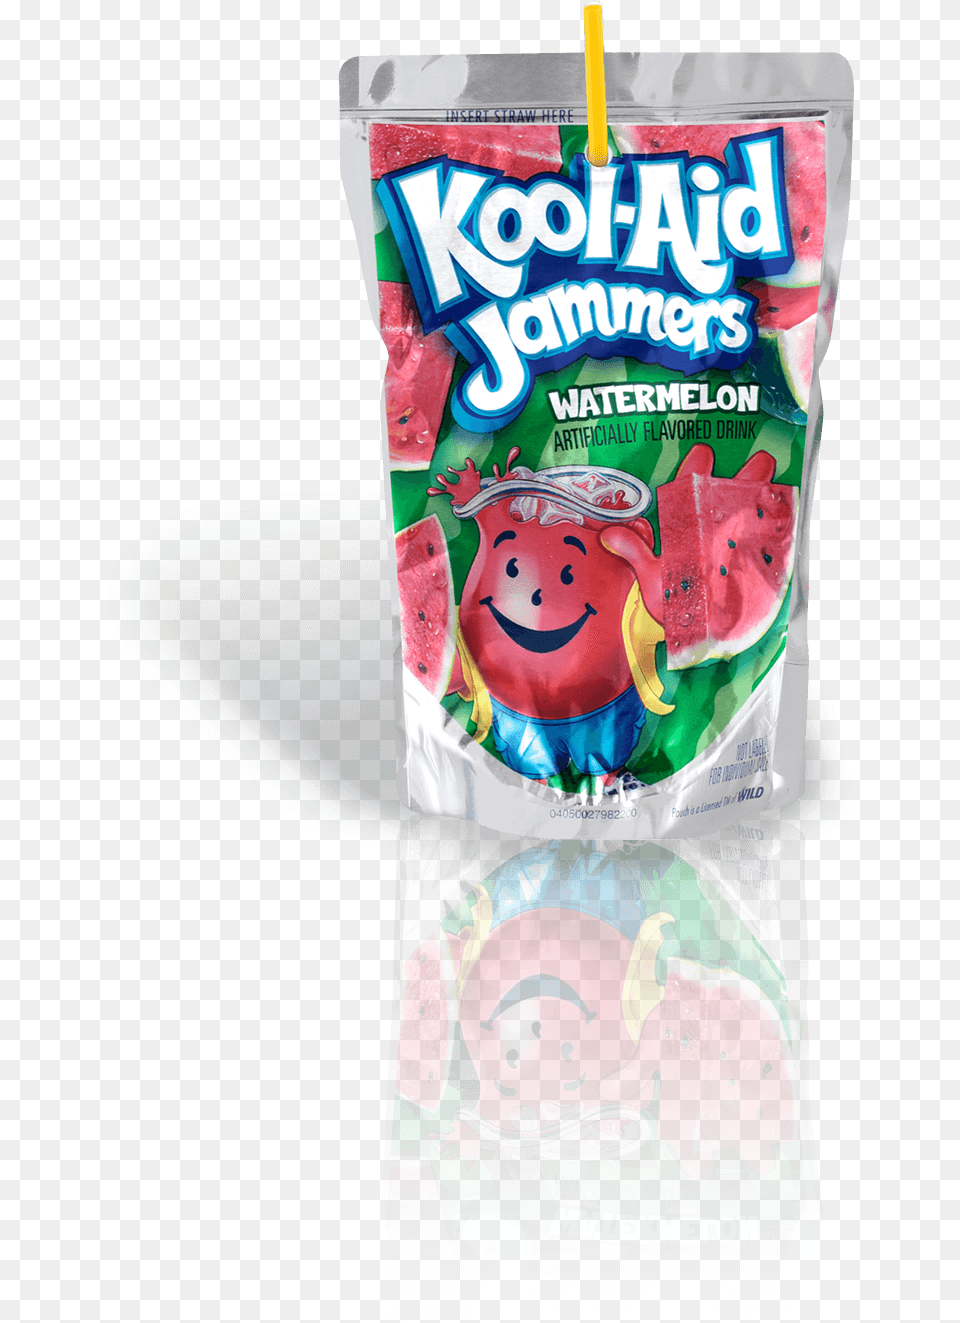 Kool Aid Jammers Watermelon Flavored Drink 60 Fl Oz Kool Aid Jammers Watermelon 1 Pouches, Baby, Person, Food, Sweets Free Png Download